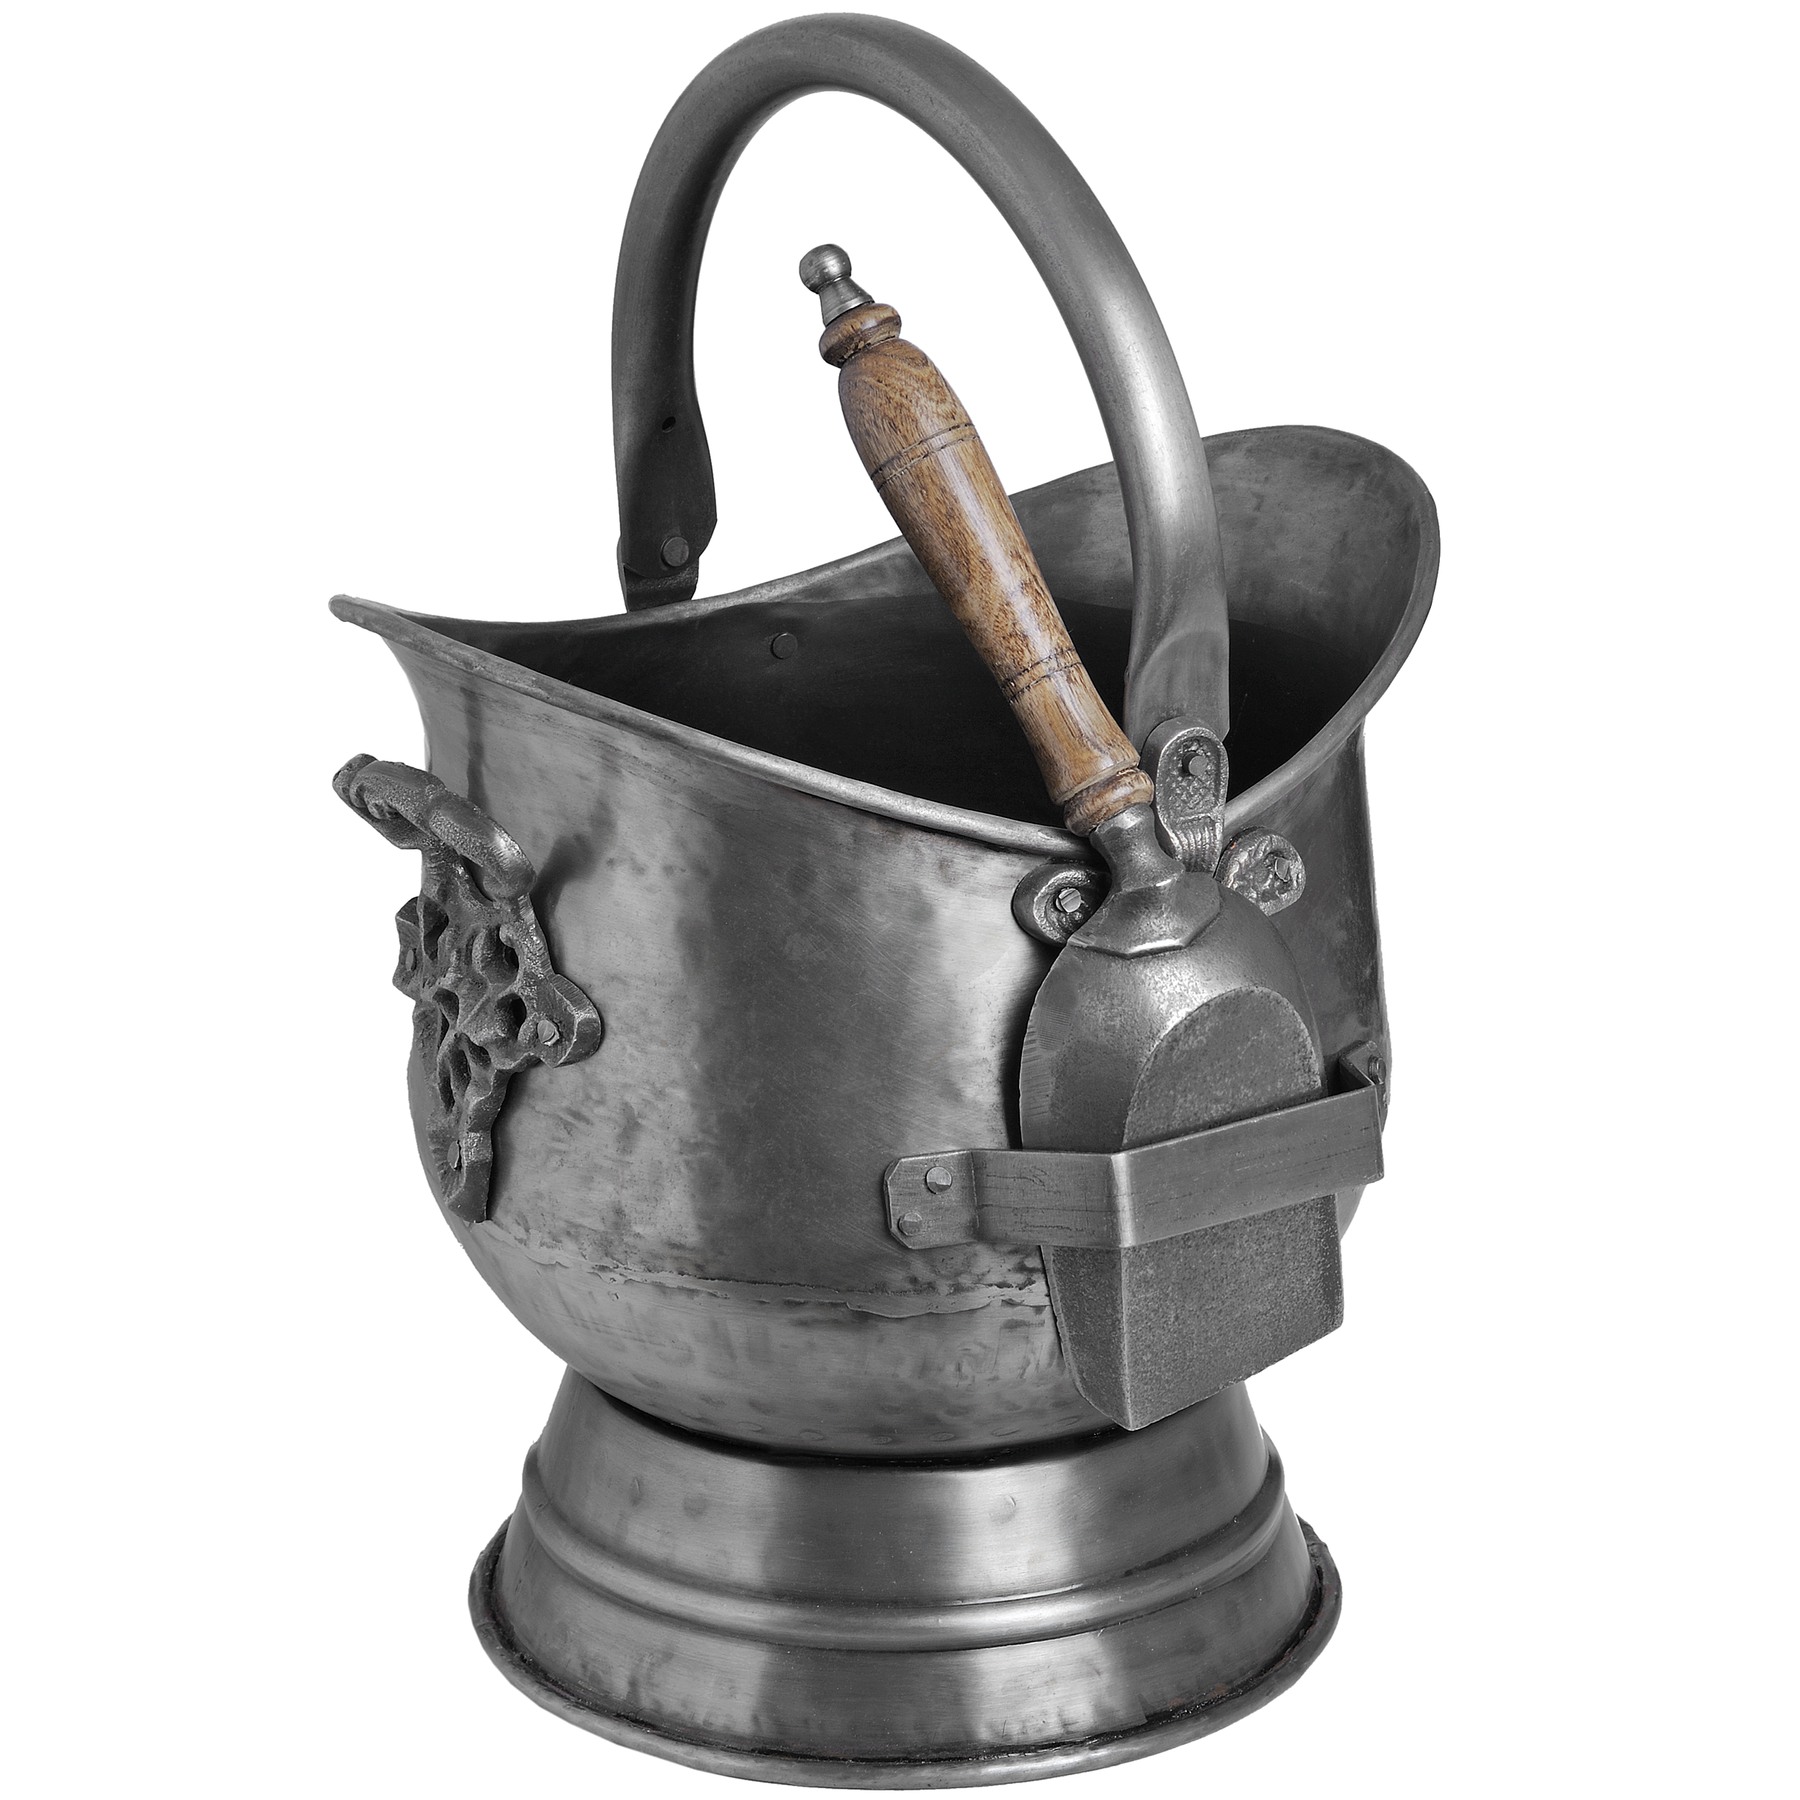 Antique Pewter Coal Bucket with Shovel - Image 1